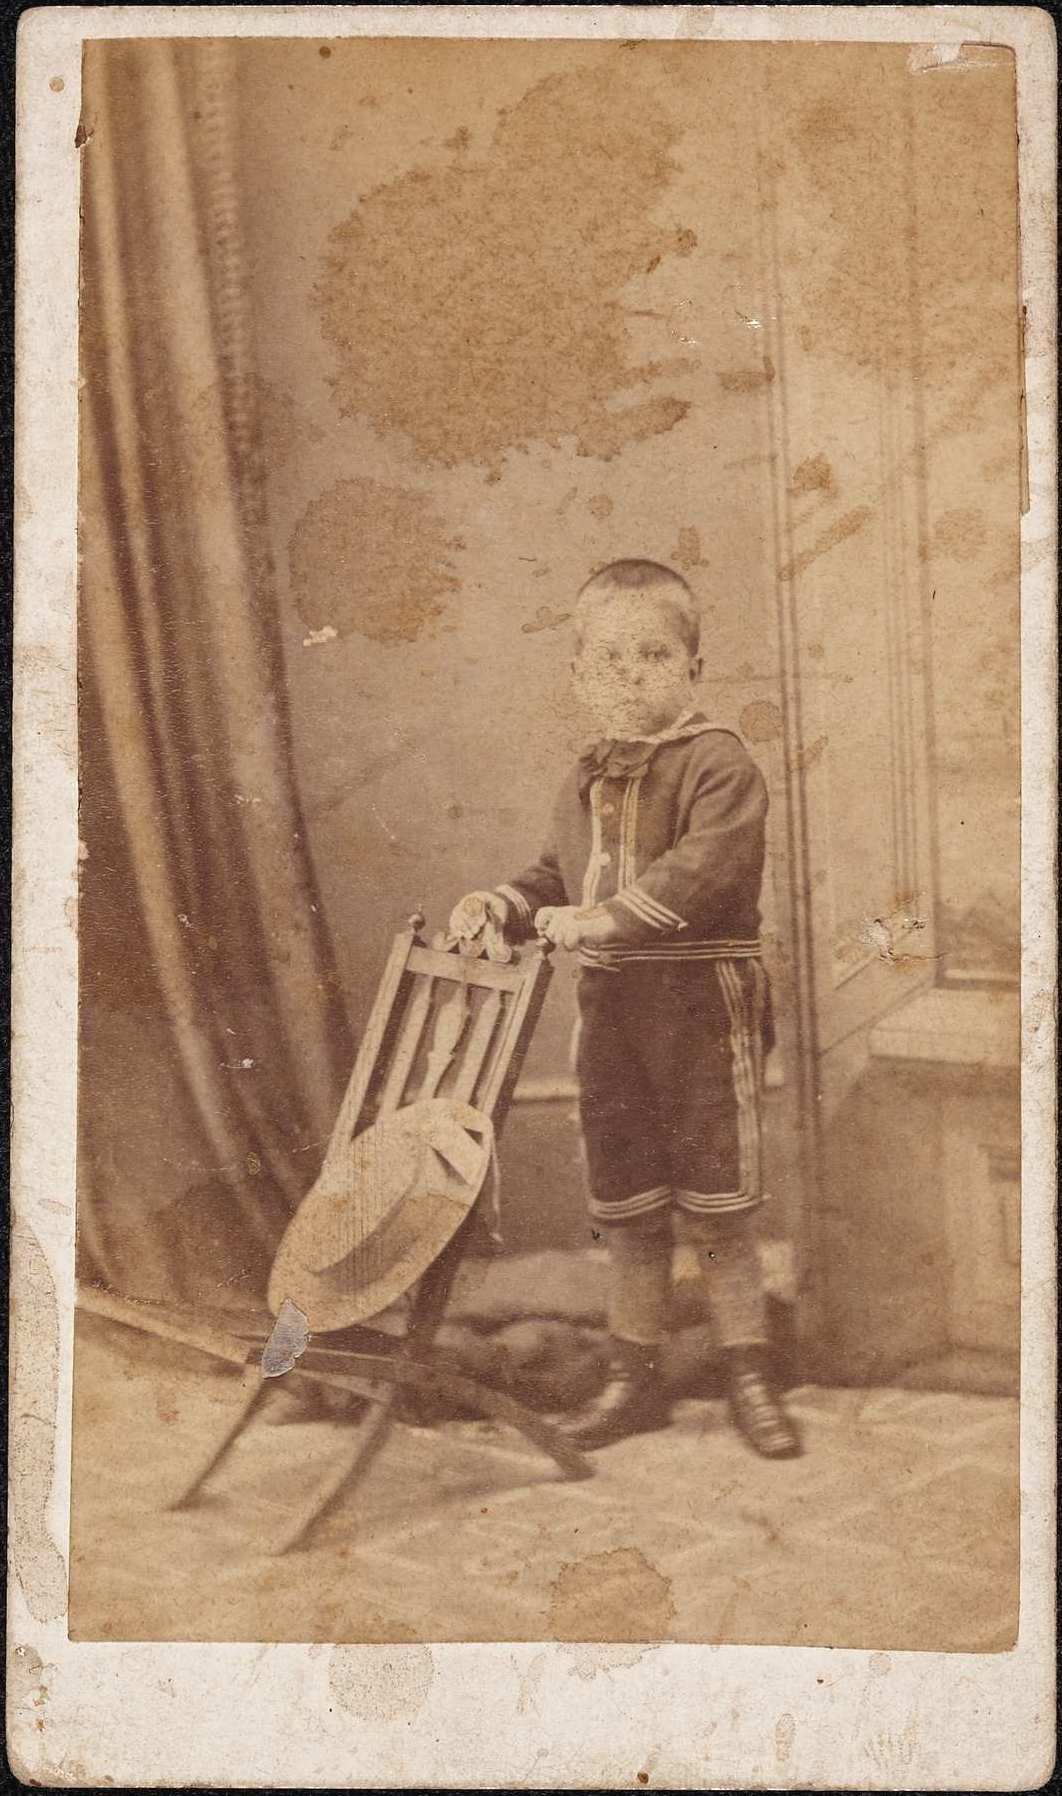 Master Donald McKay Barnet aged 3 years, Sydney N.S.W, July 1873 / W. H. Schroder